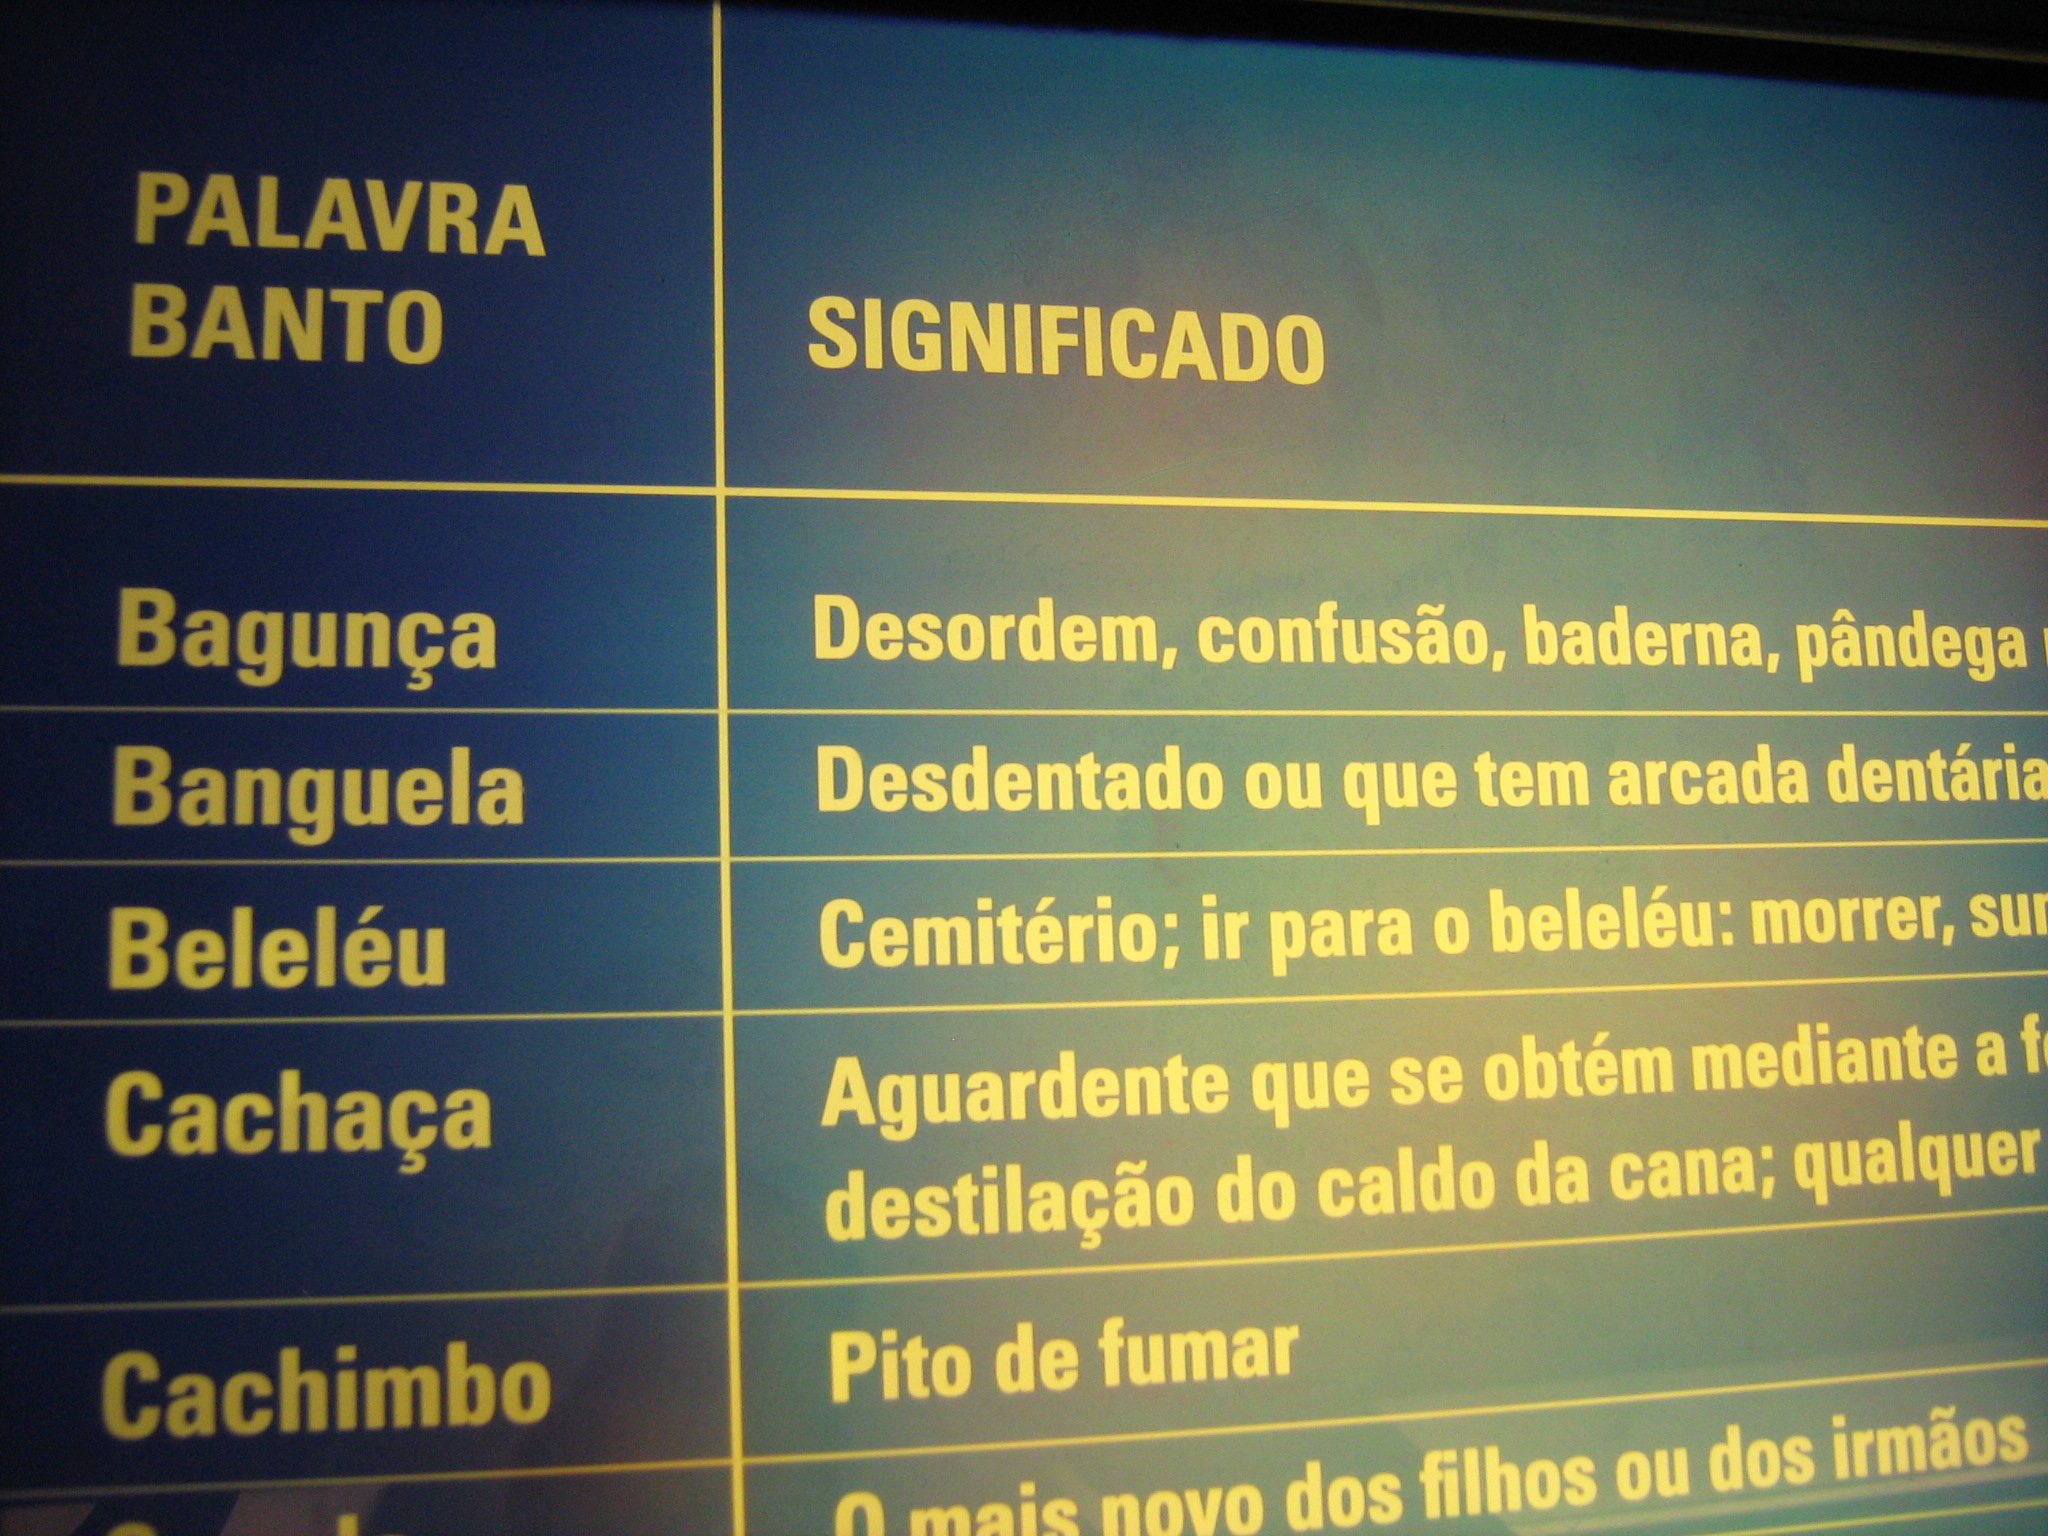 Museu da Língua Portuguesa